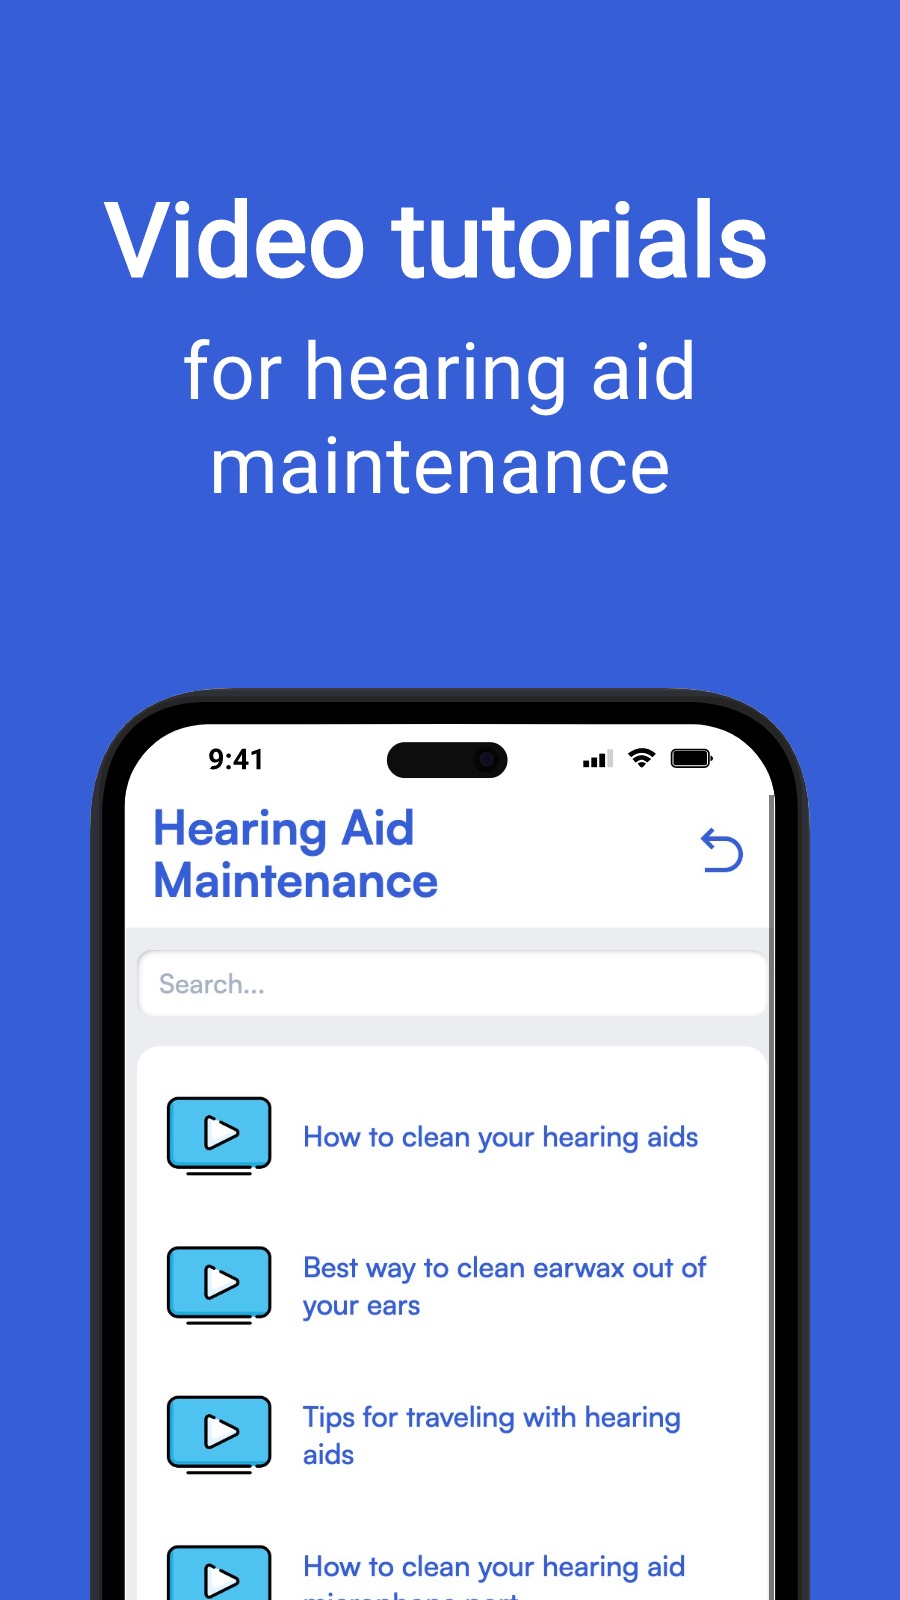 Video tutorials - for hearing aid maintenance